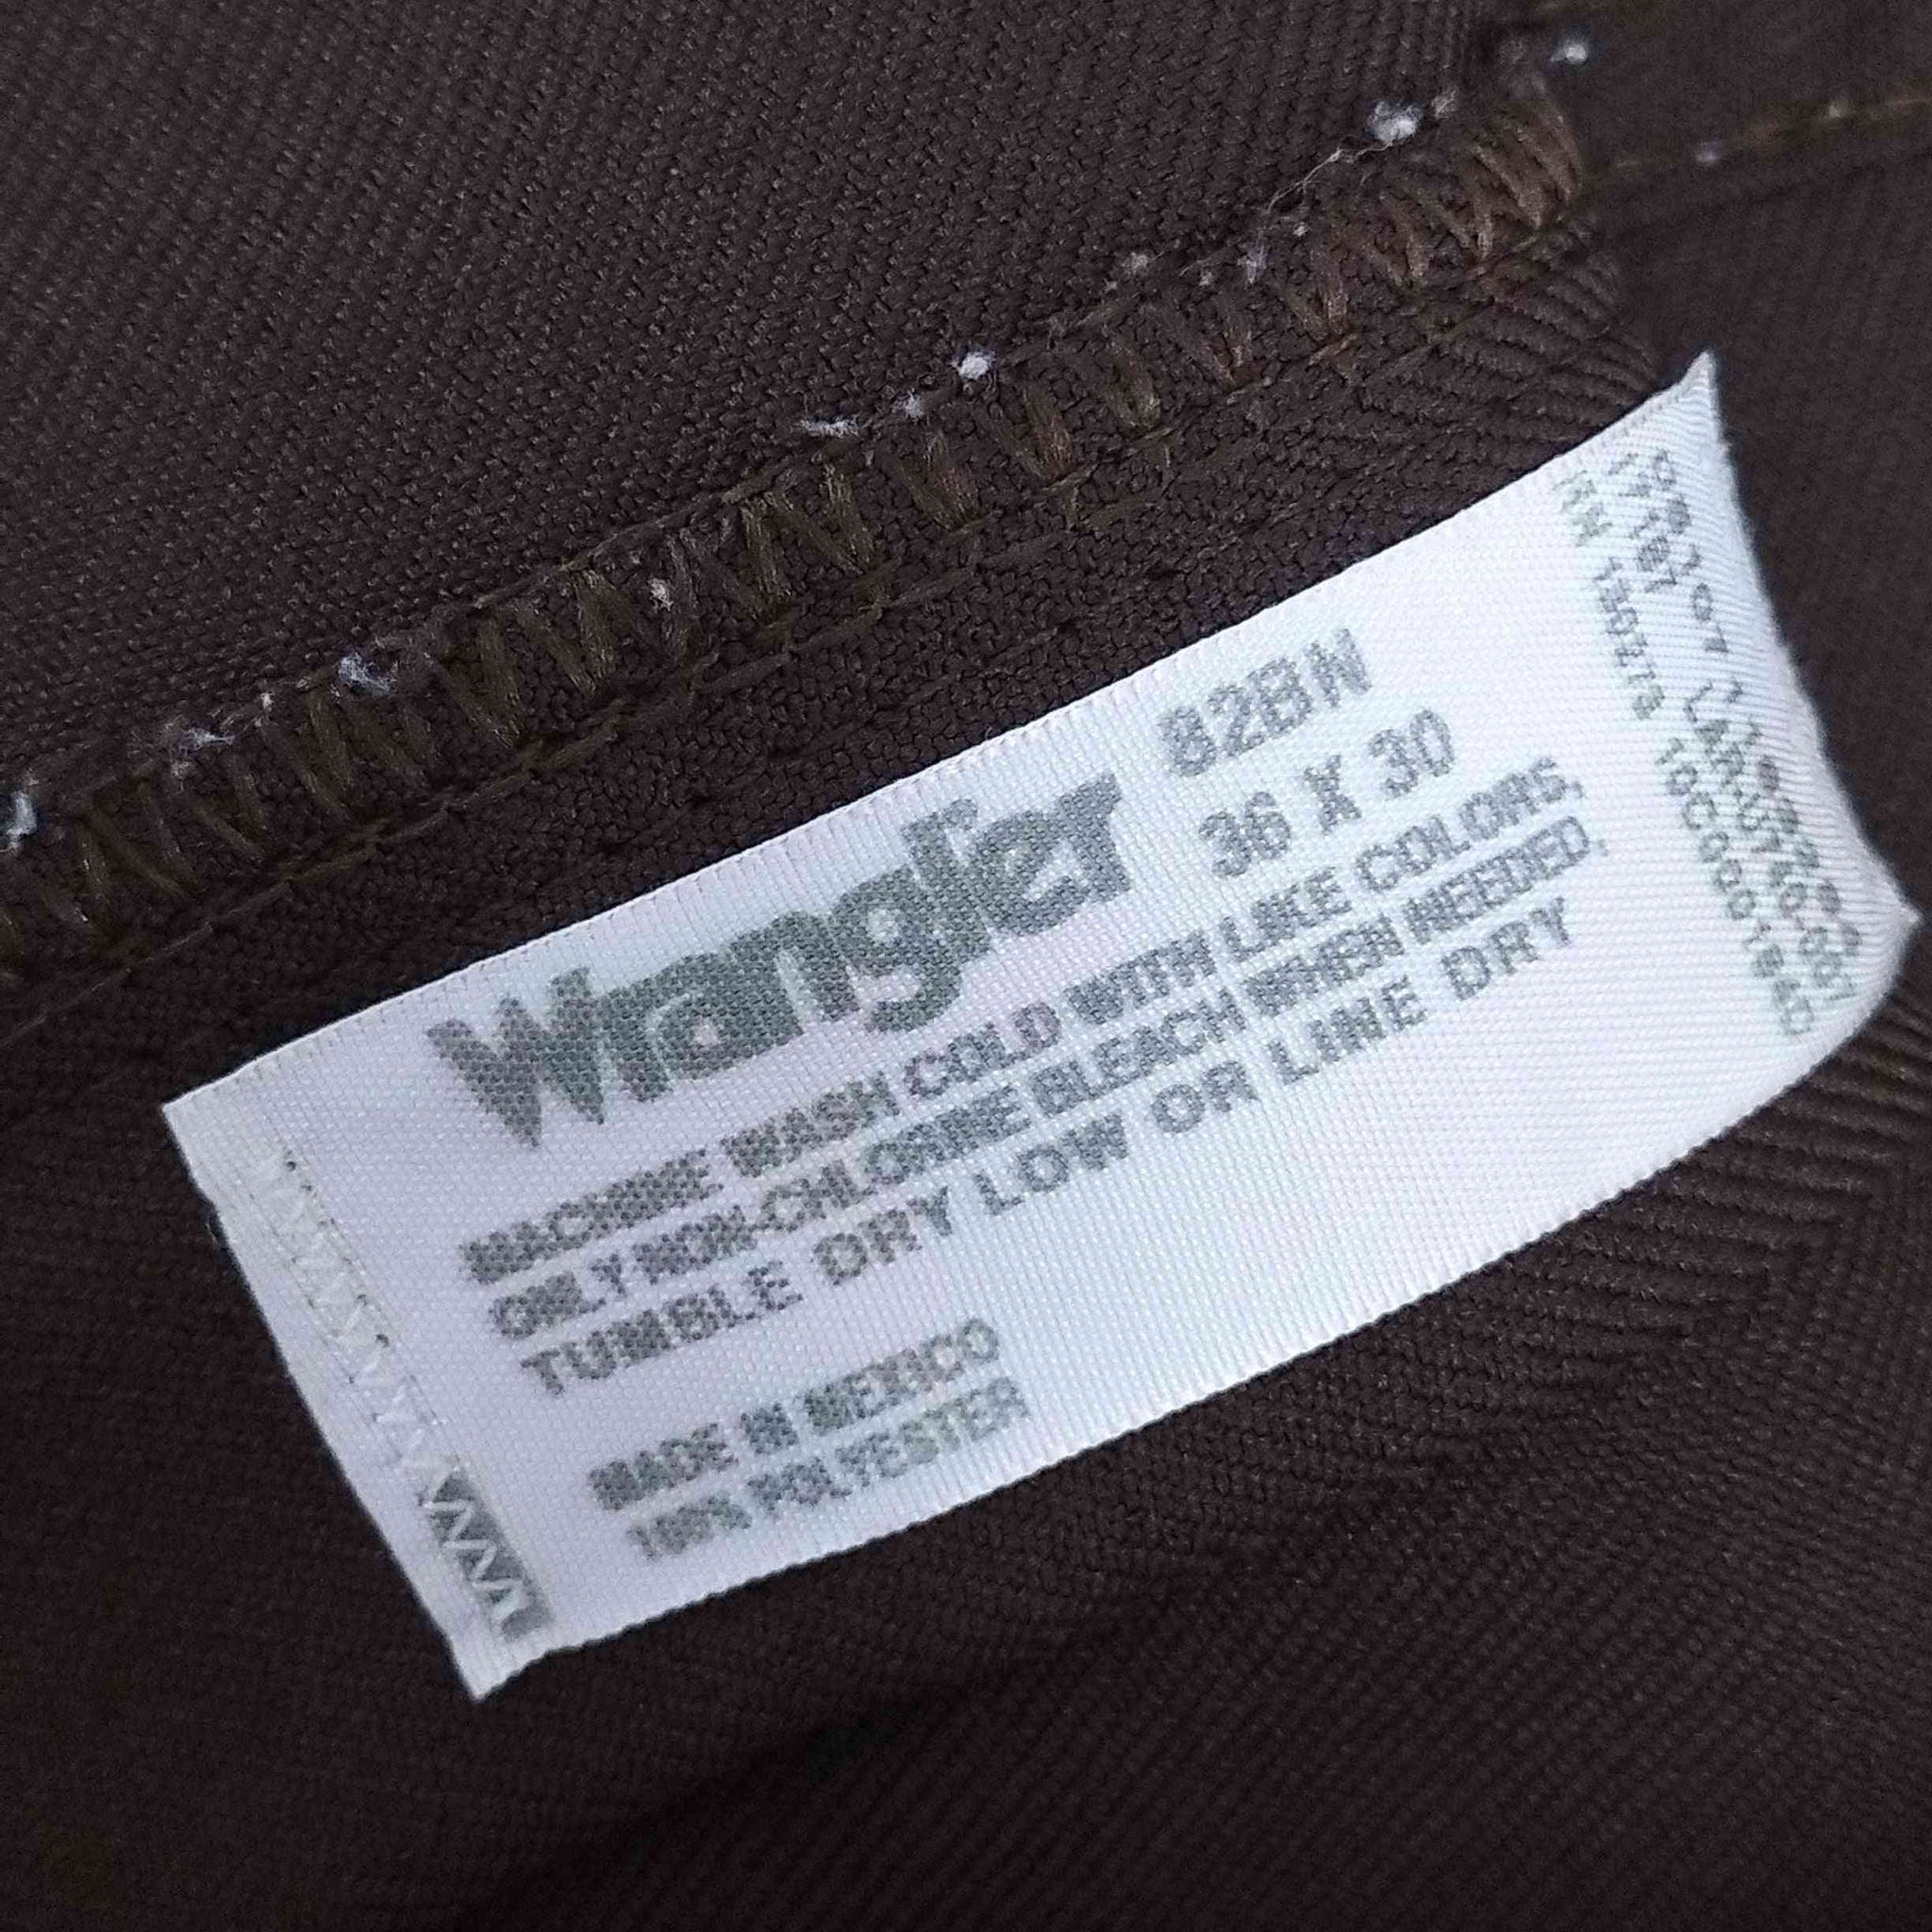 Wrangler(ラングラー)メキシコ製 センタープレス ランチャードレスパンツ